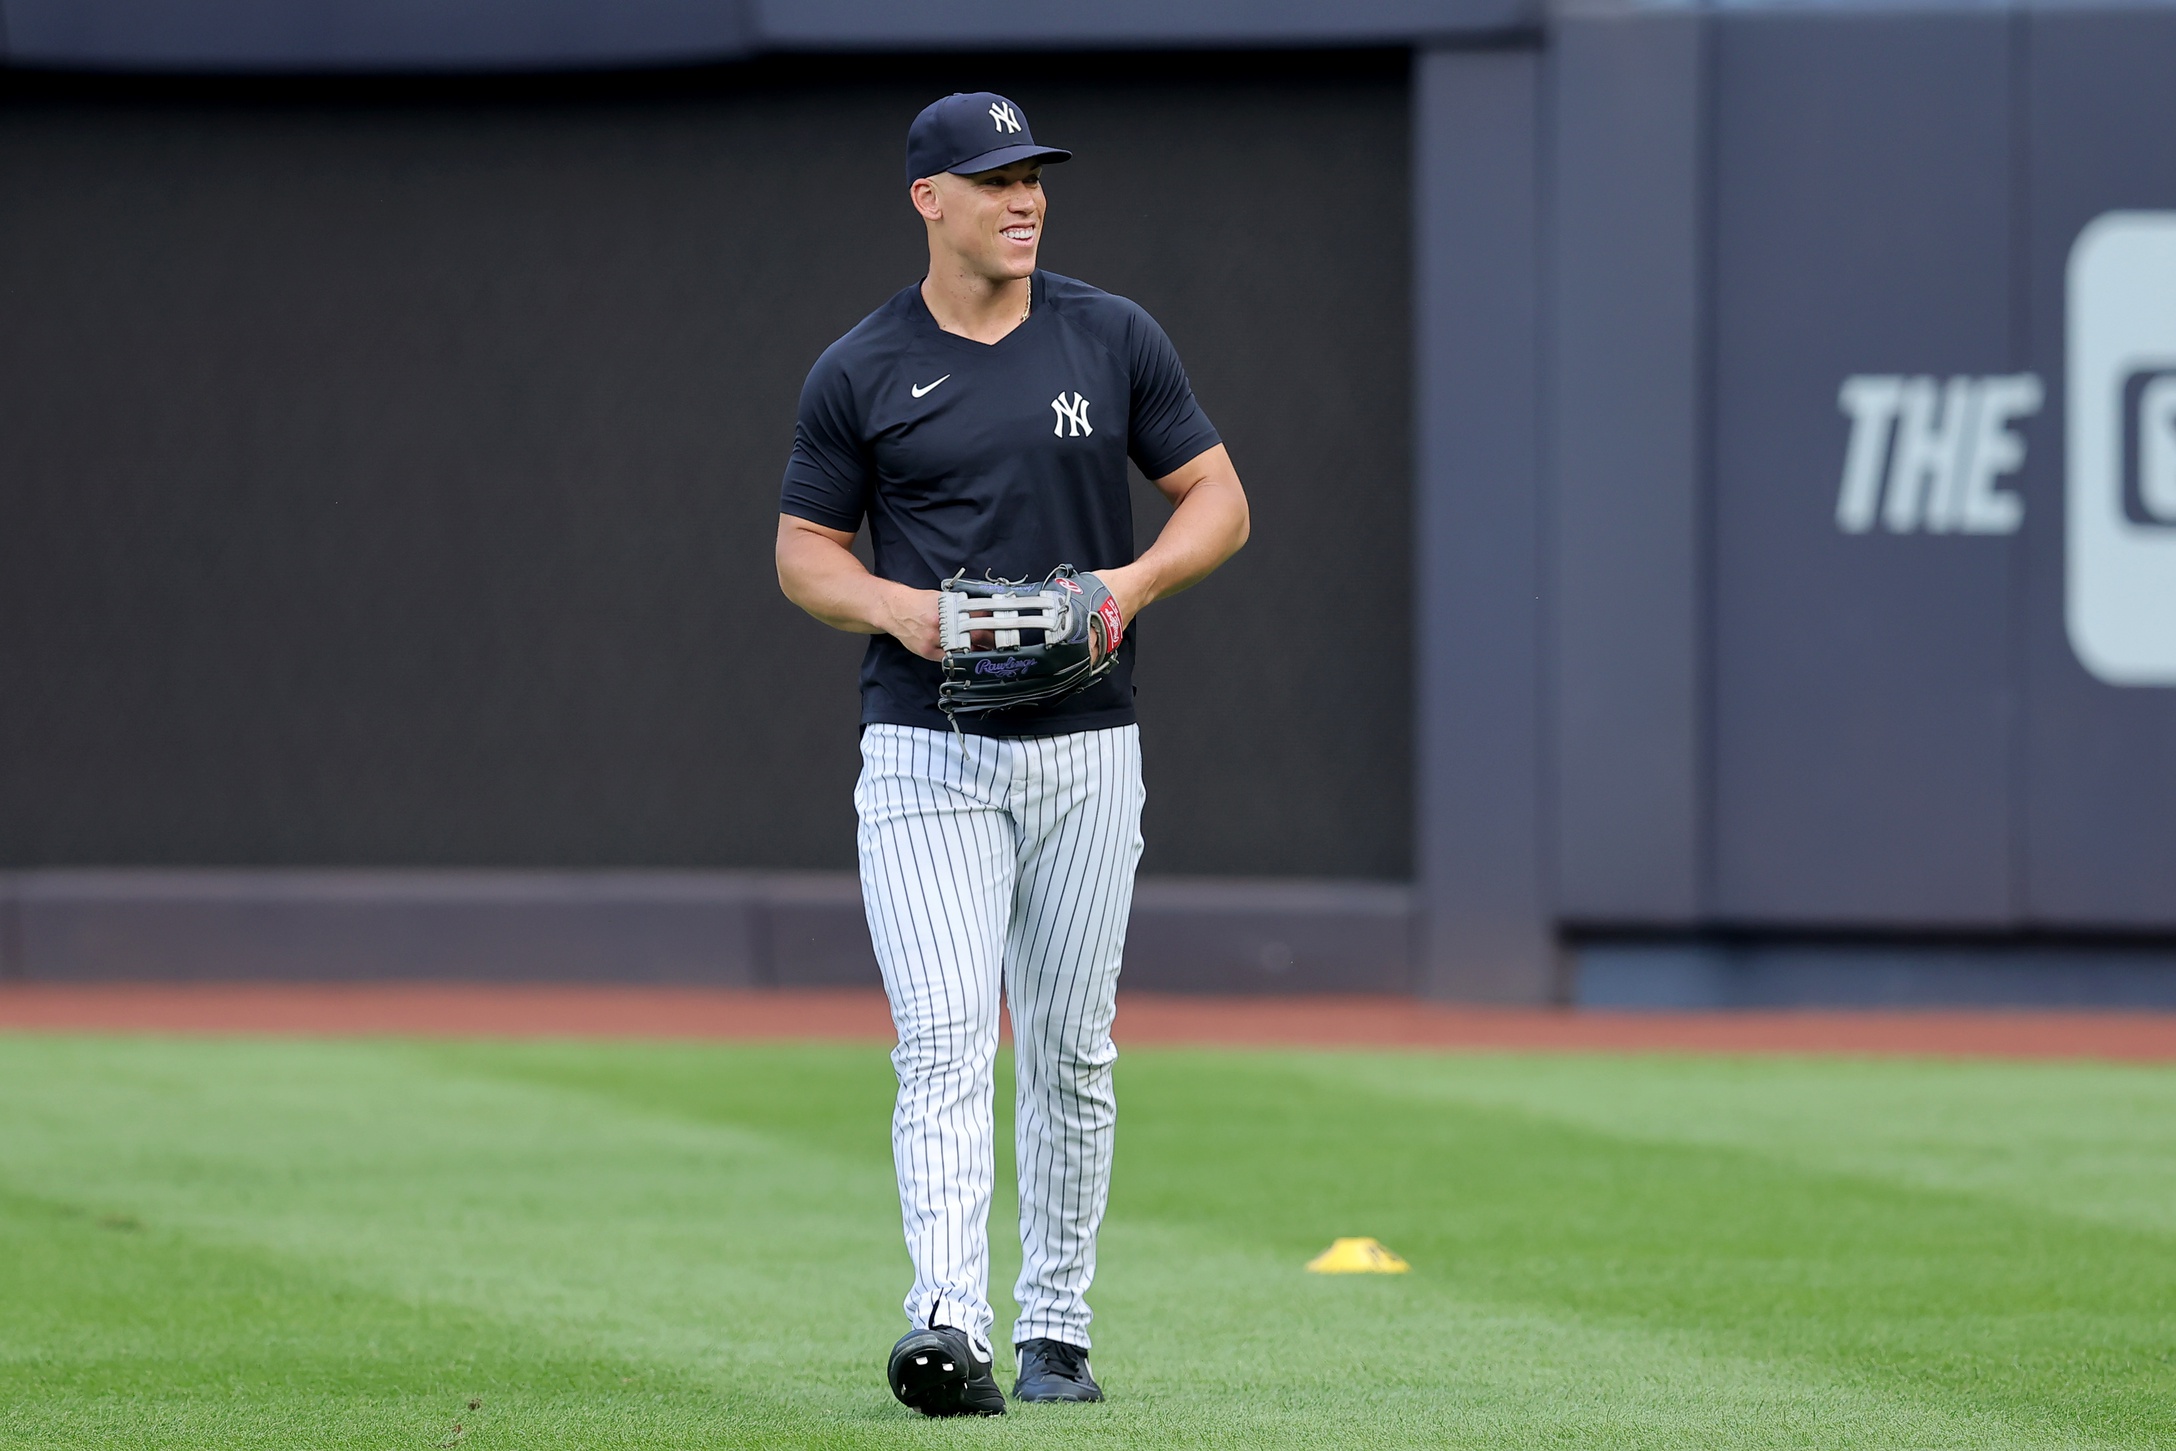 New York Yankees' Aaron Judge loses AL MVP race to Astros' Jose Altuve